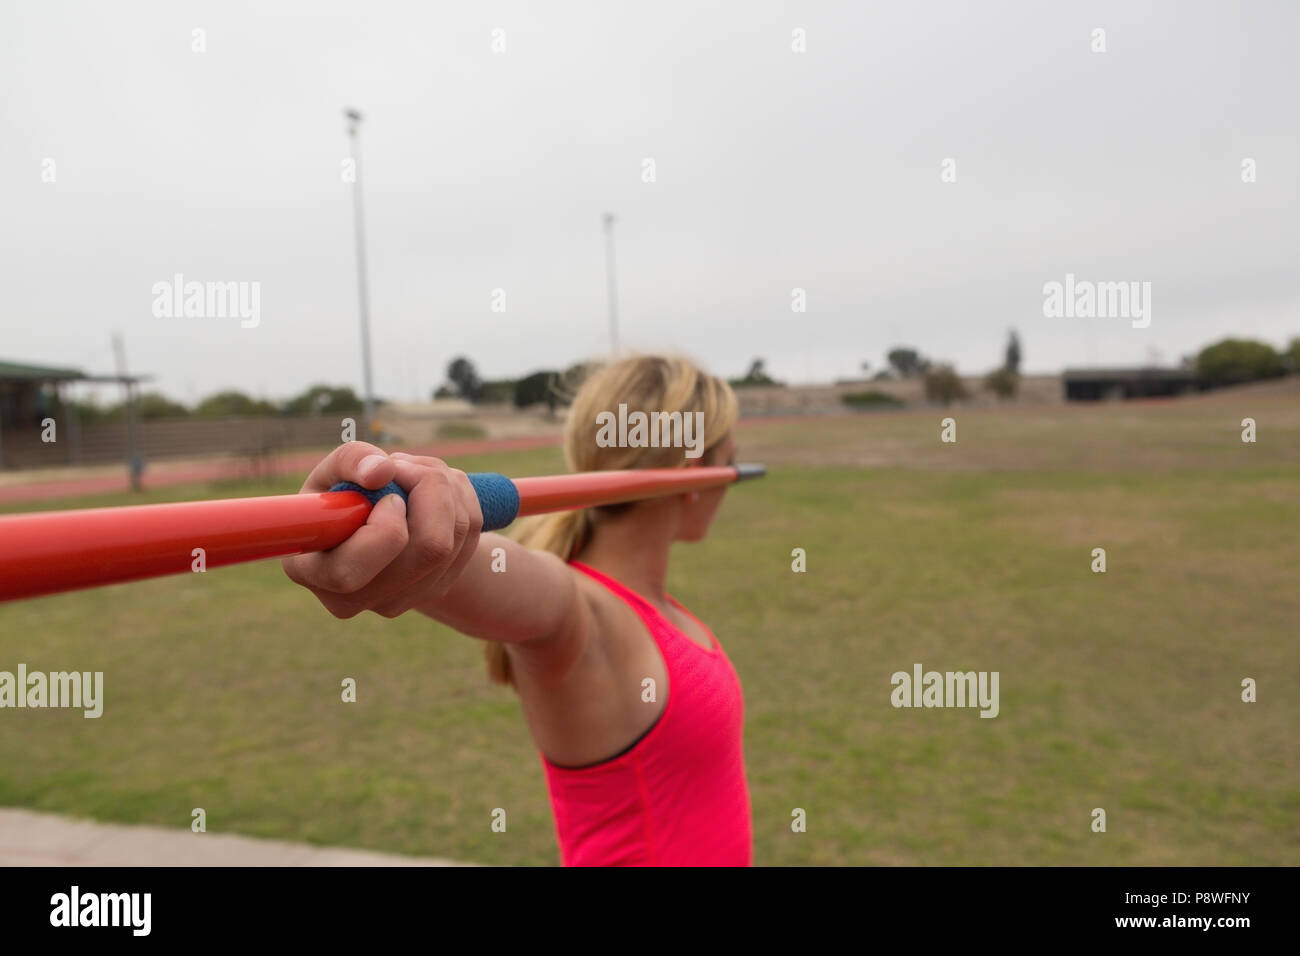 Female athlete practicing javelin throw Stock Photo